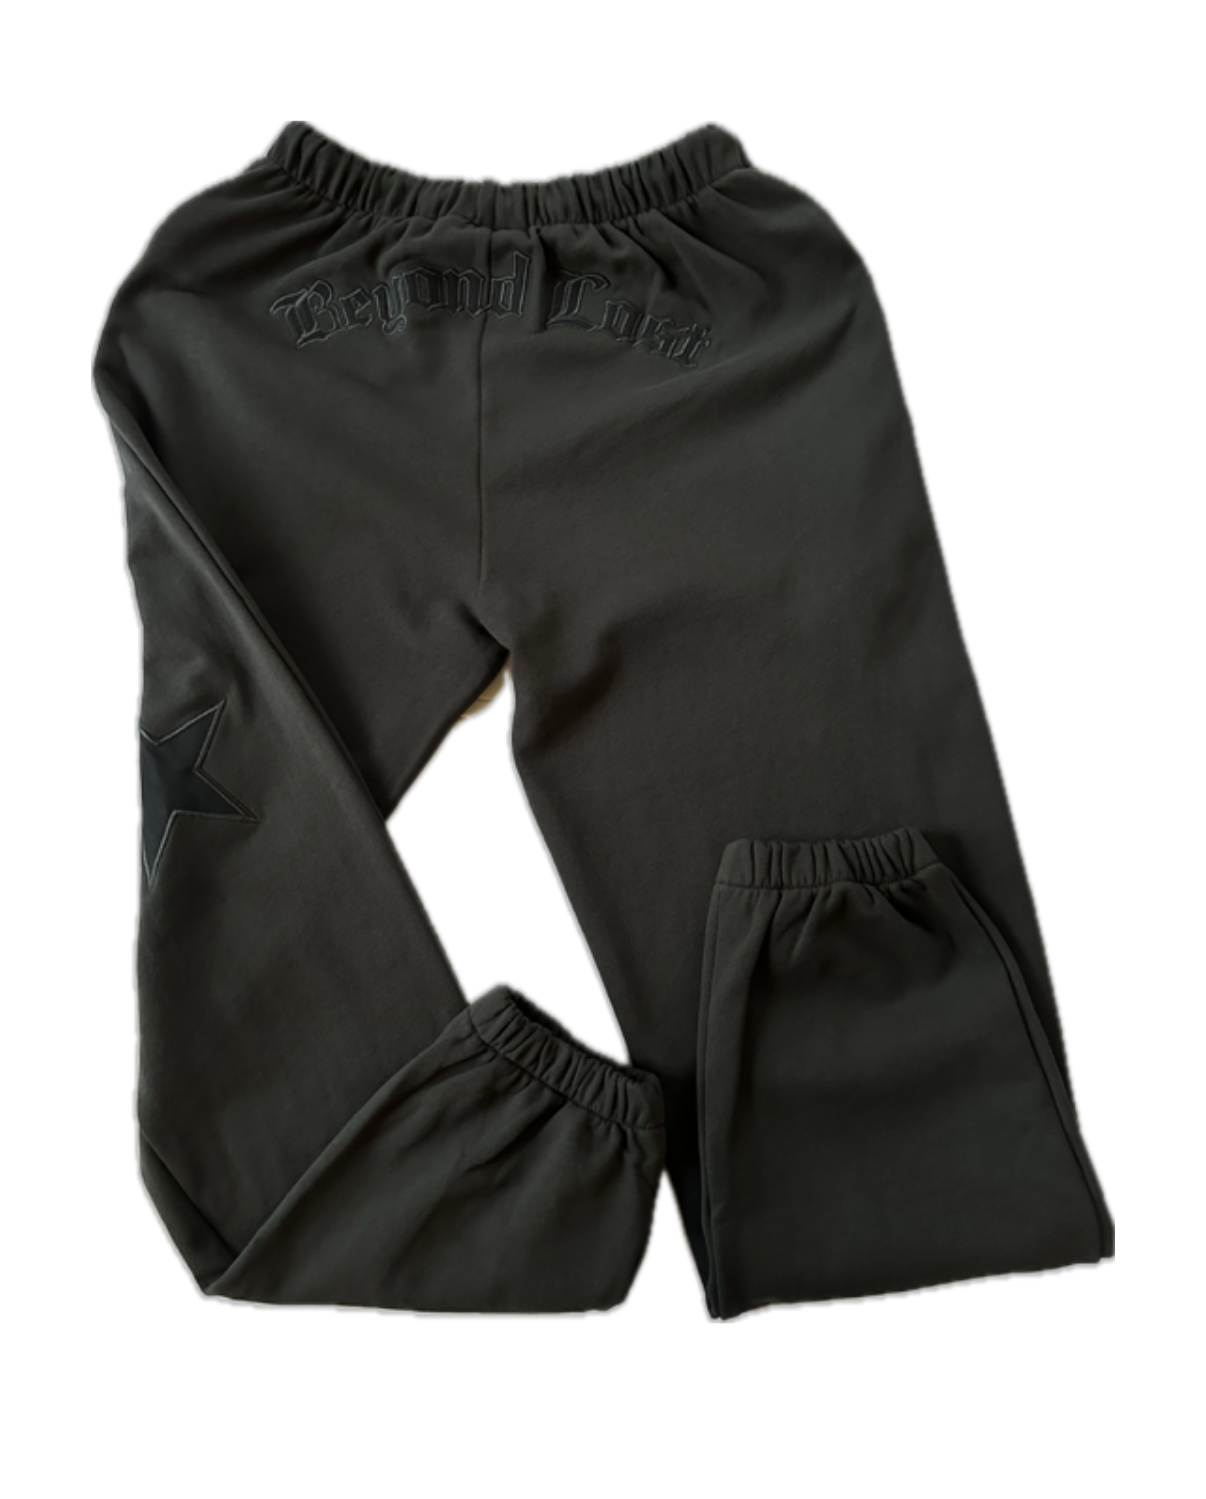 Smoke Gray on Gray Star Sweatpants. Lightweight Oversized. Limited Edition!